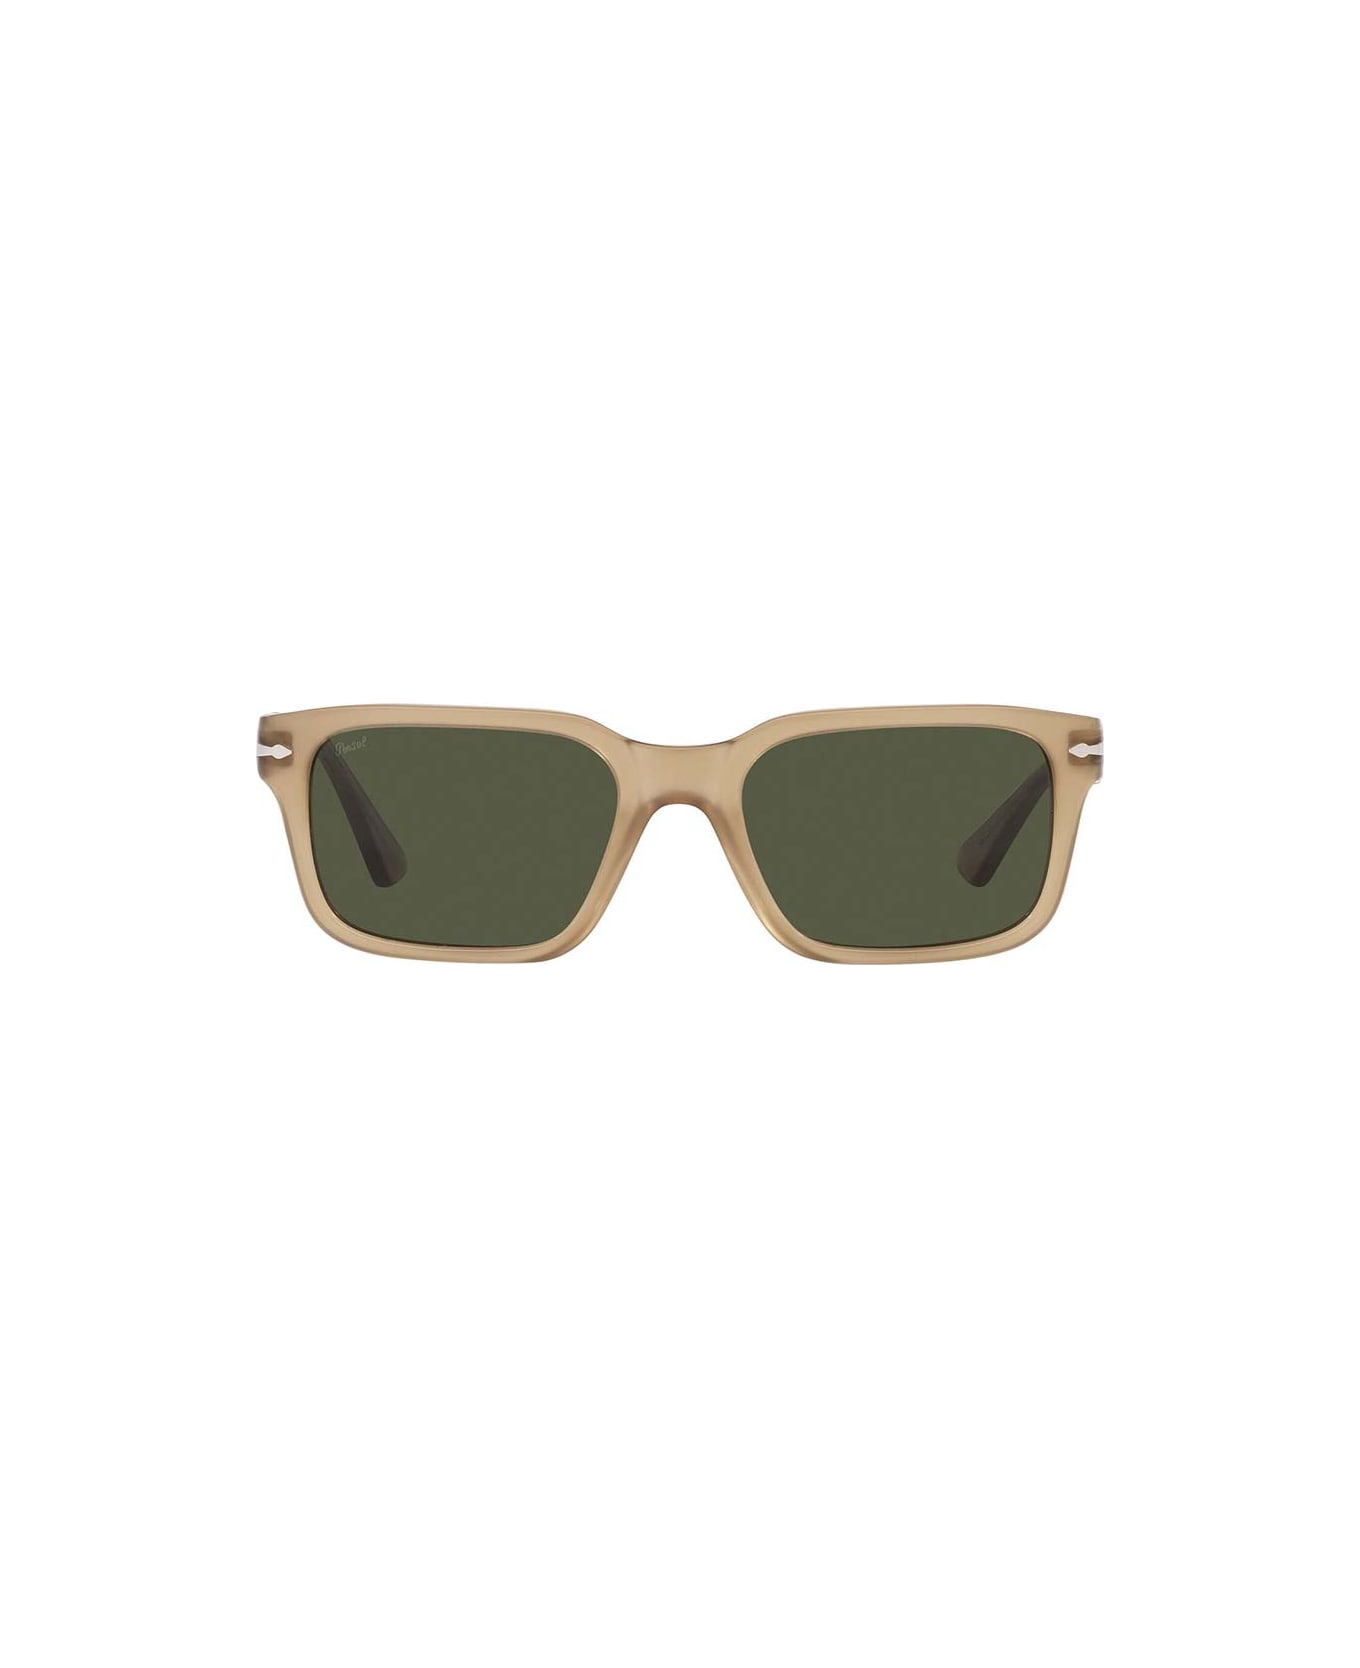 Persol Eyewear - Beige/Verde